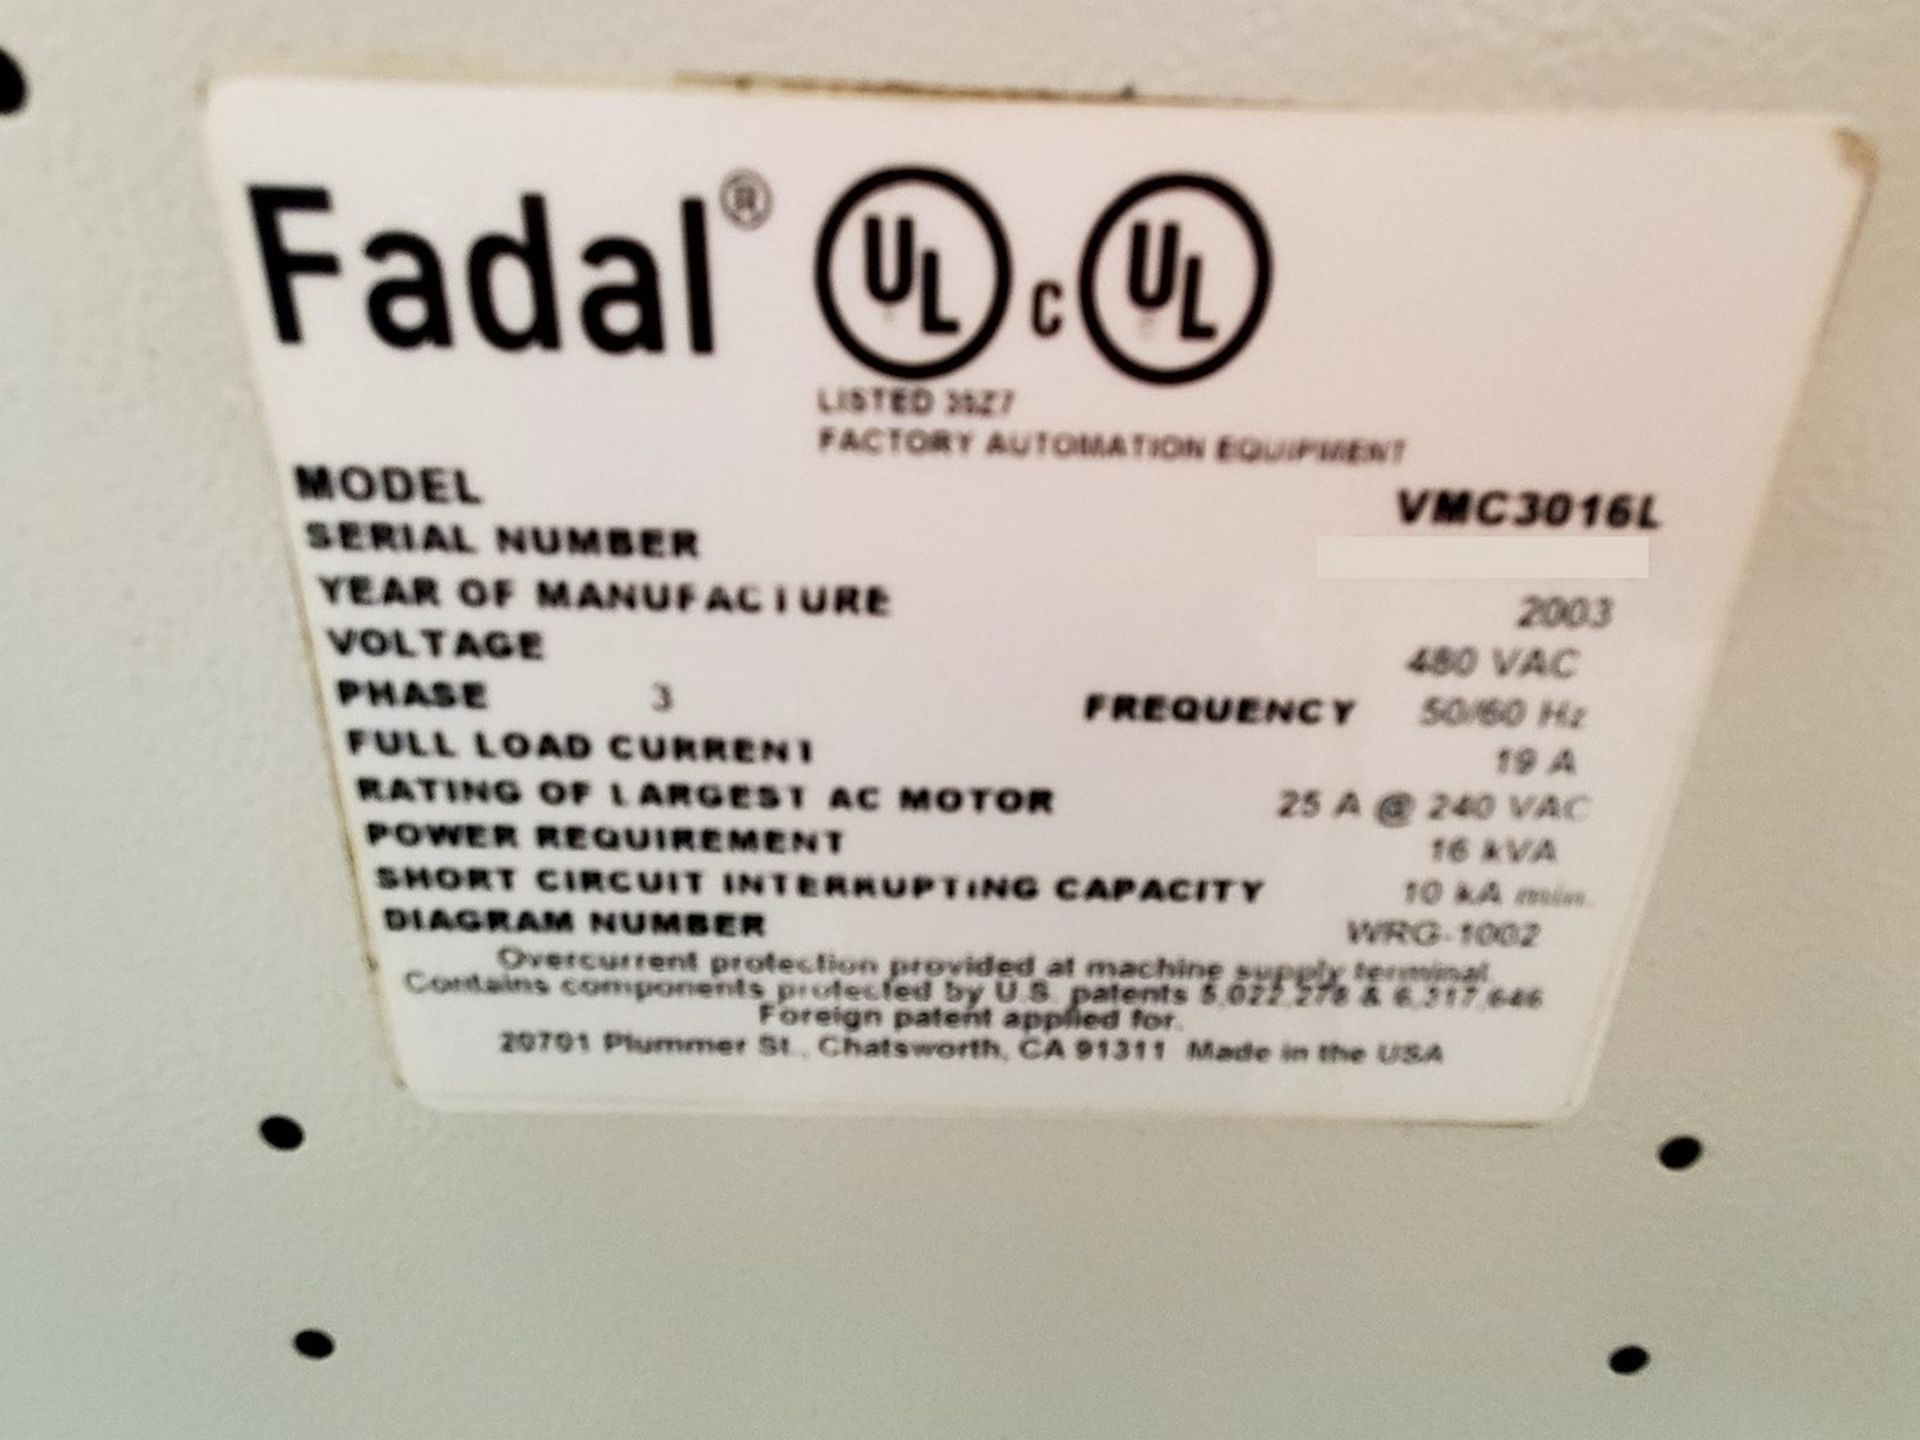 2003 Fadal VMC 3016L, CNC Vertical Machining Center - Bild 10 aus 10